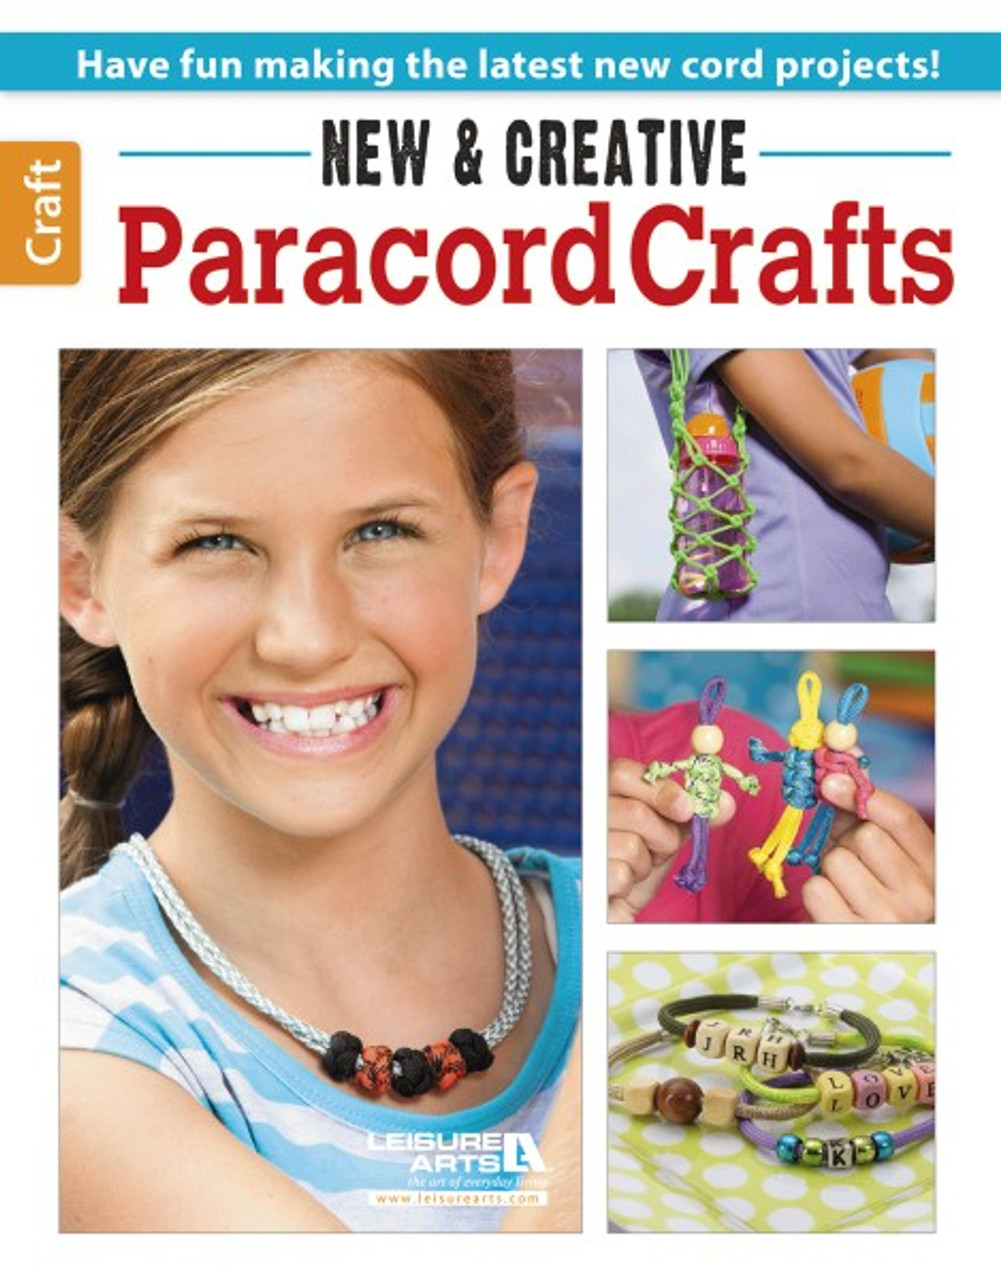 Creativity for Kids Paracord Bracelets Kit